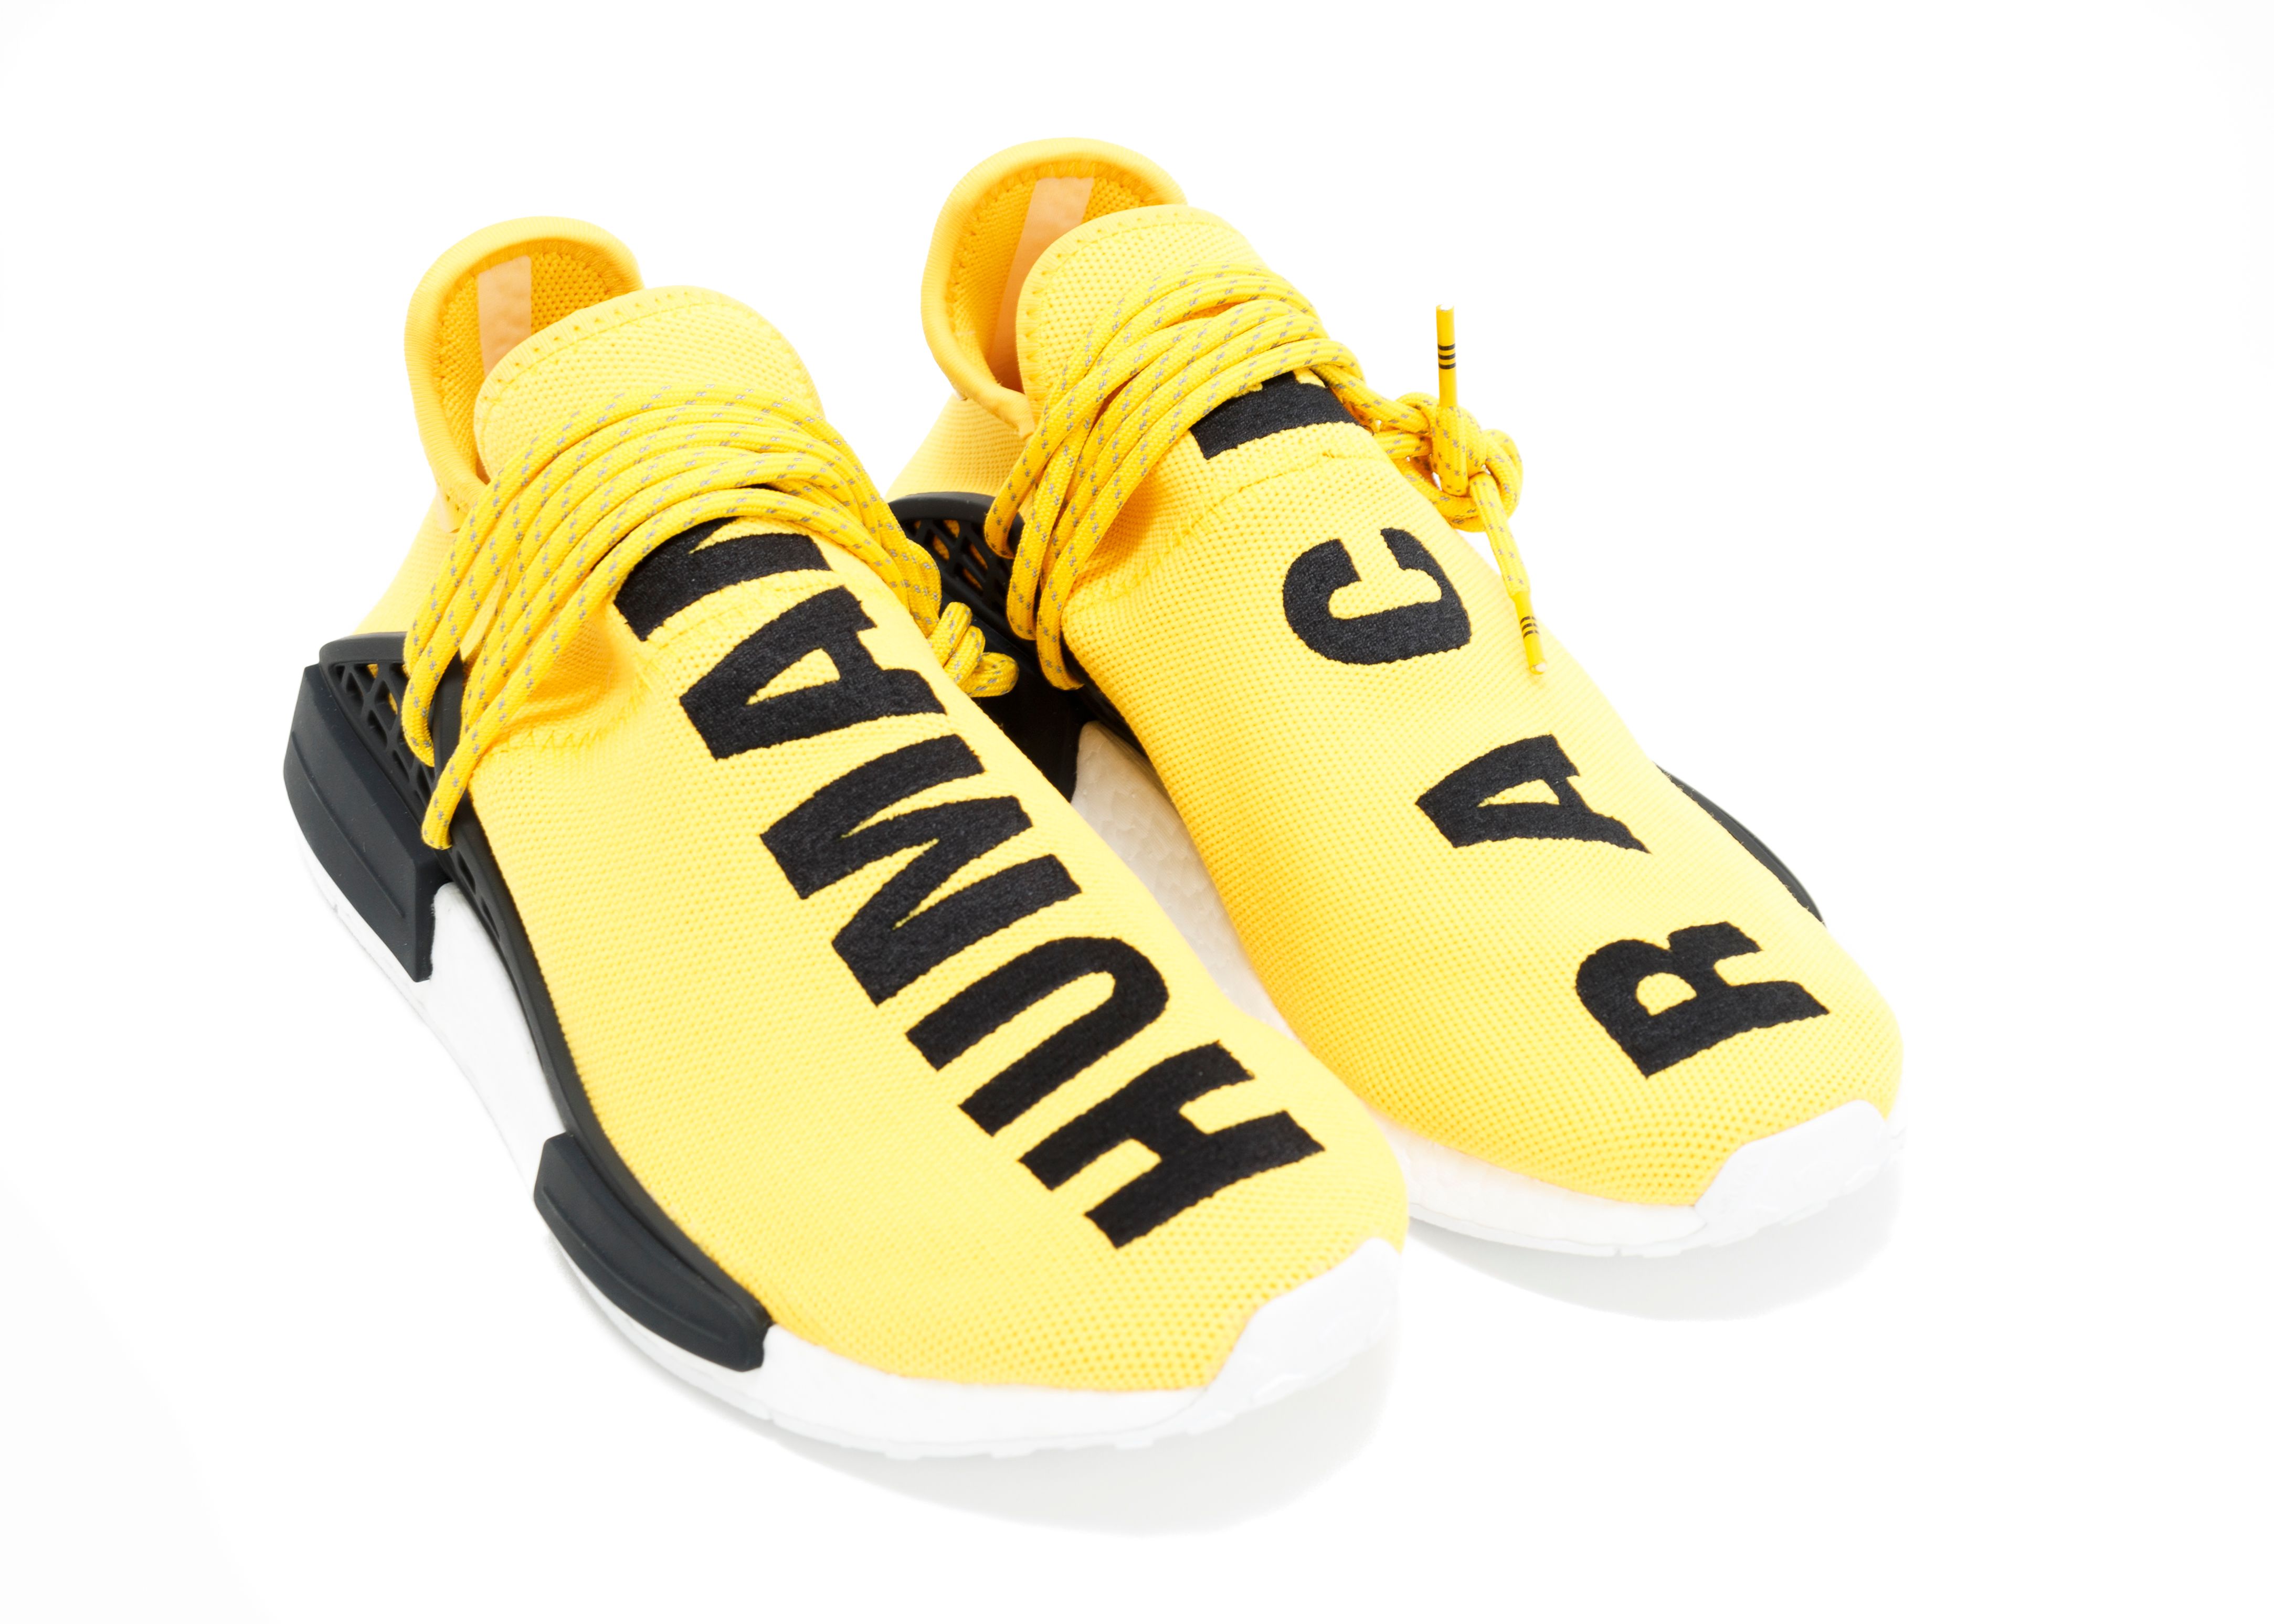 adidas human race shoes yellow